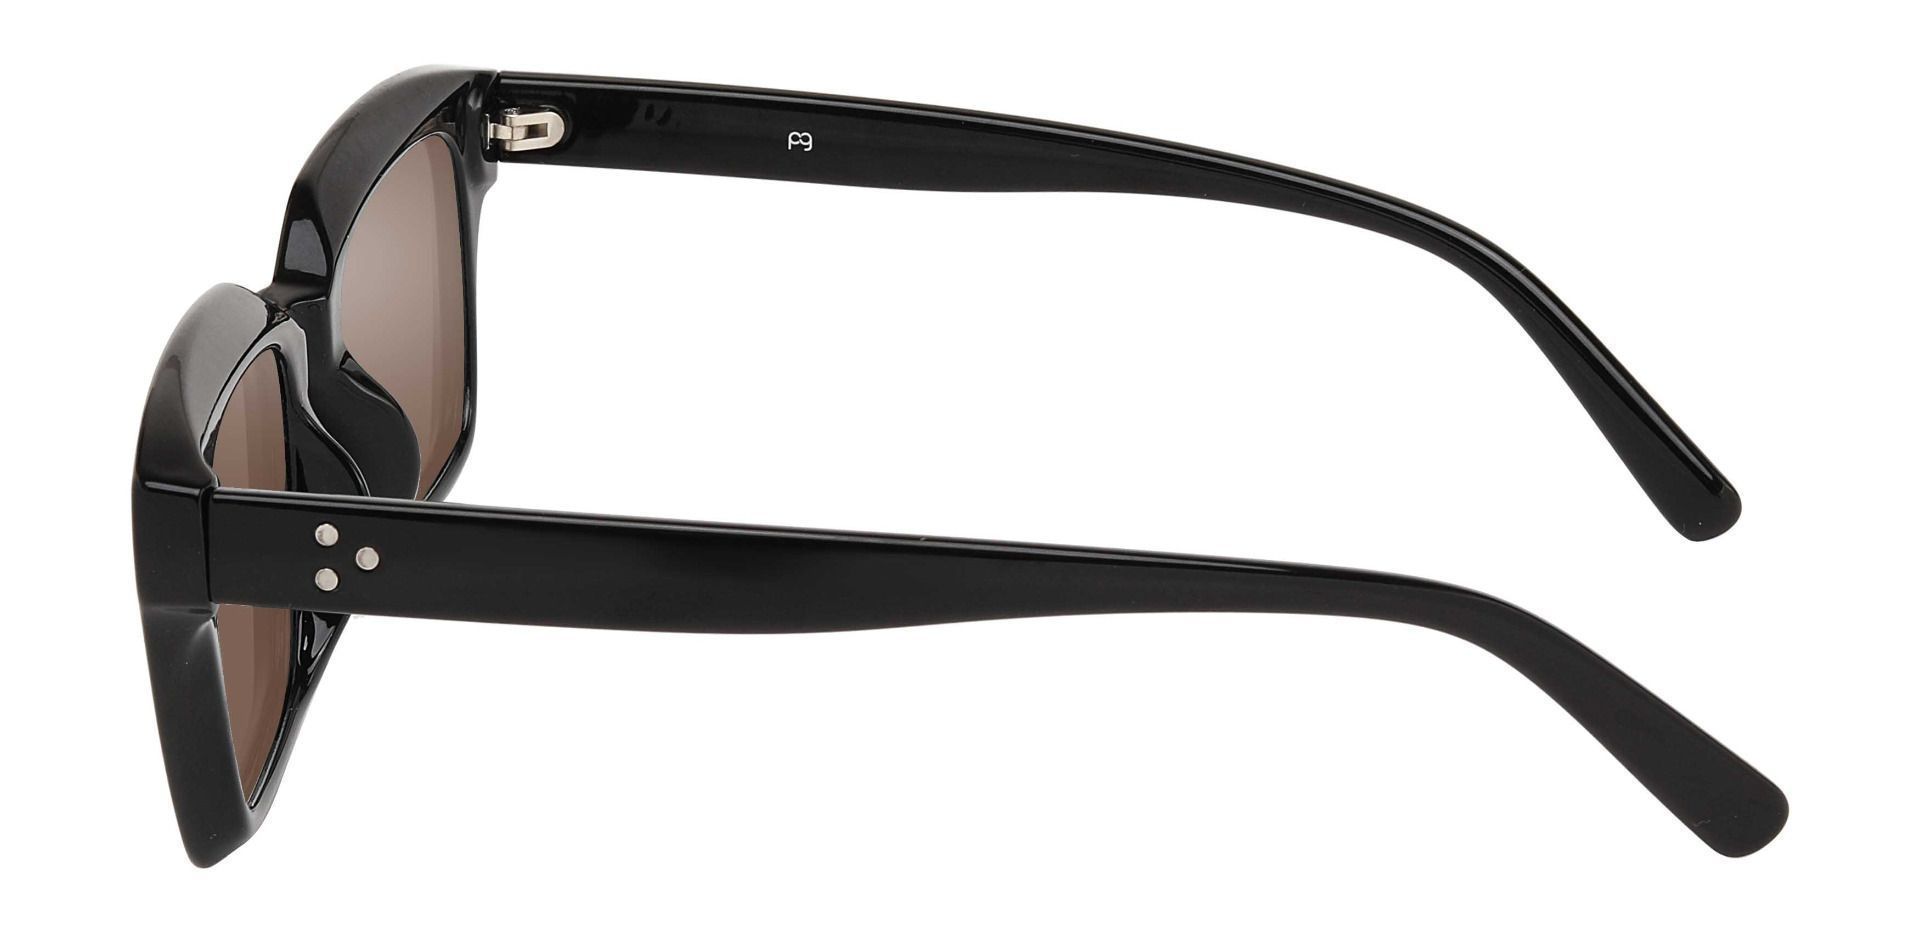 Unity Rectangle Progressive Sunglasses - Black Frame With Brown Lenses